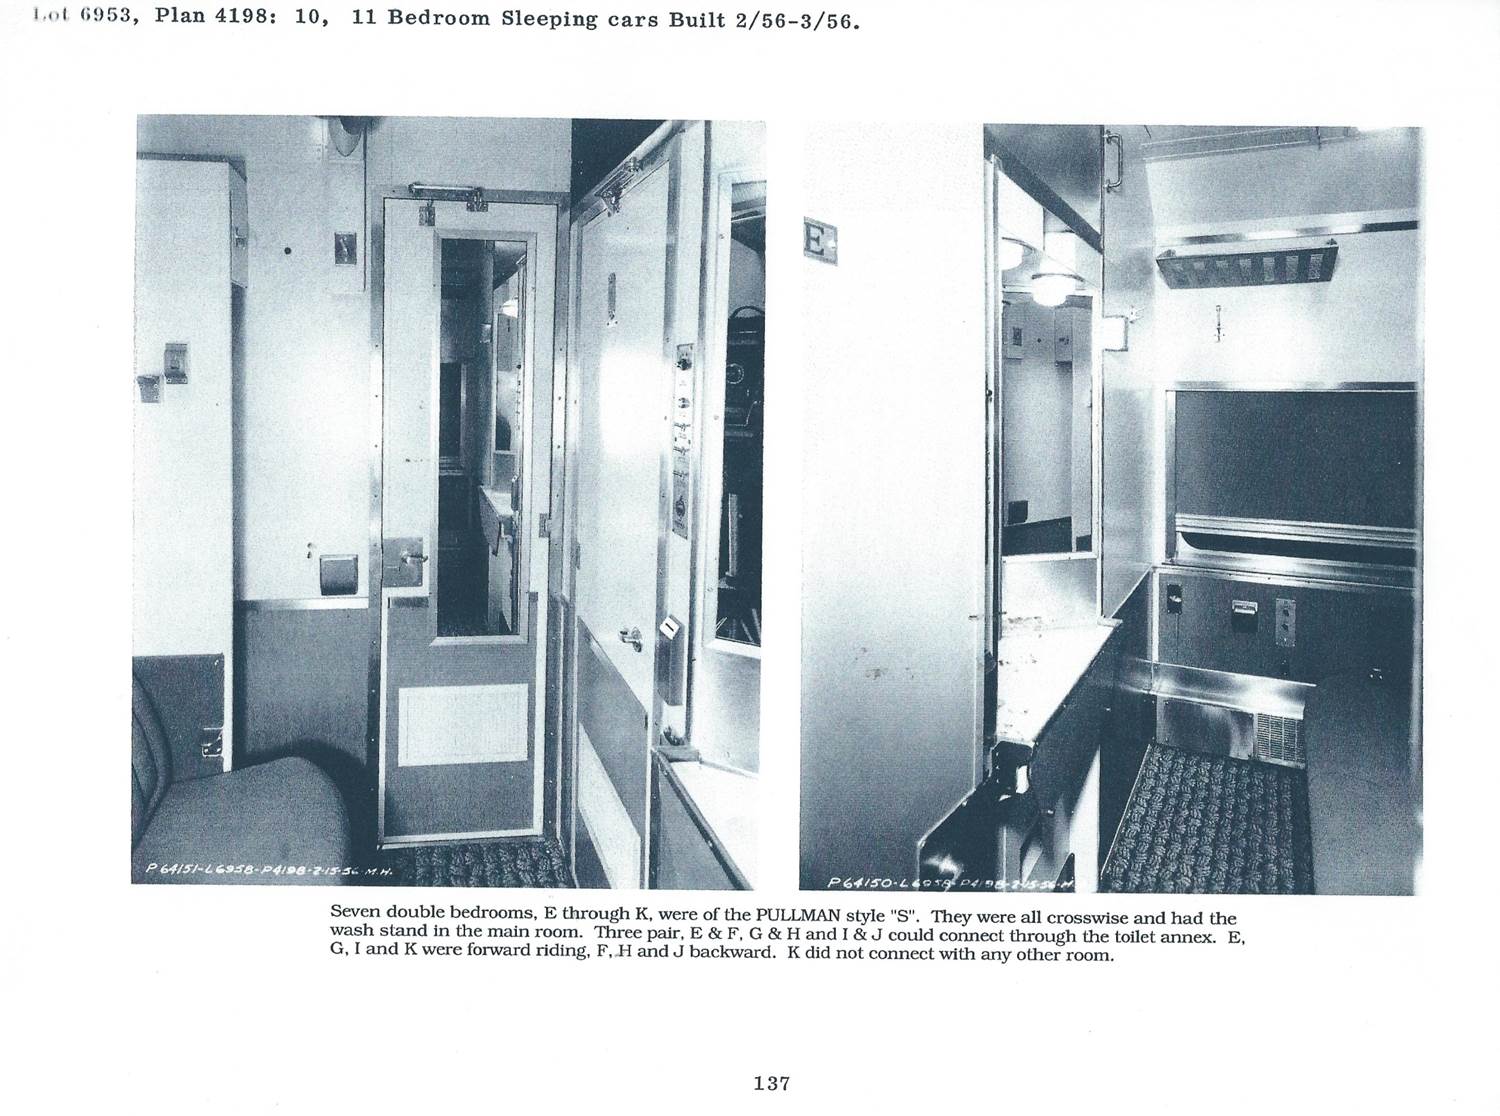 Inside of train car 2